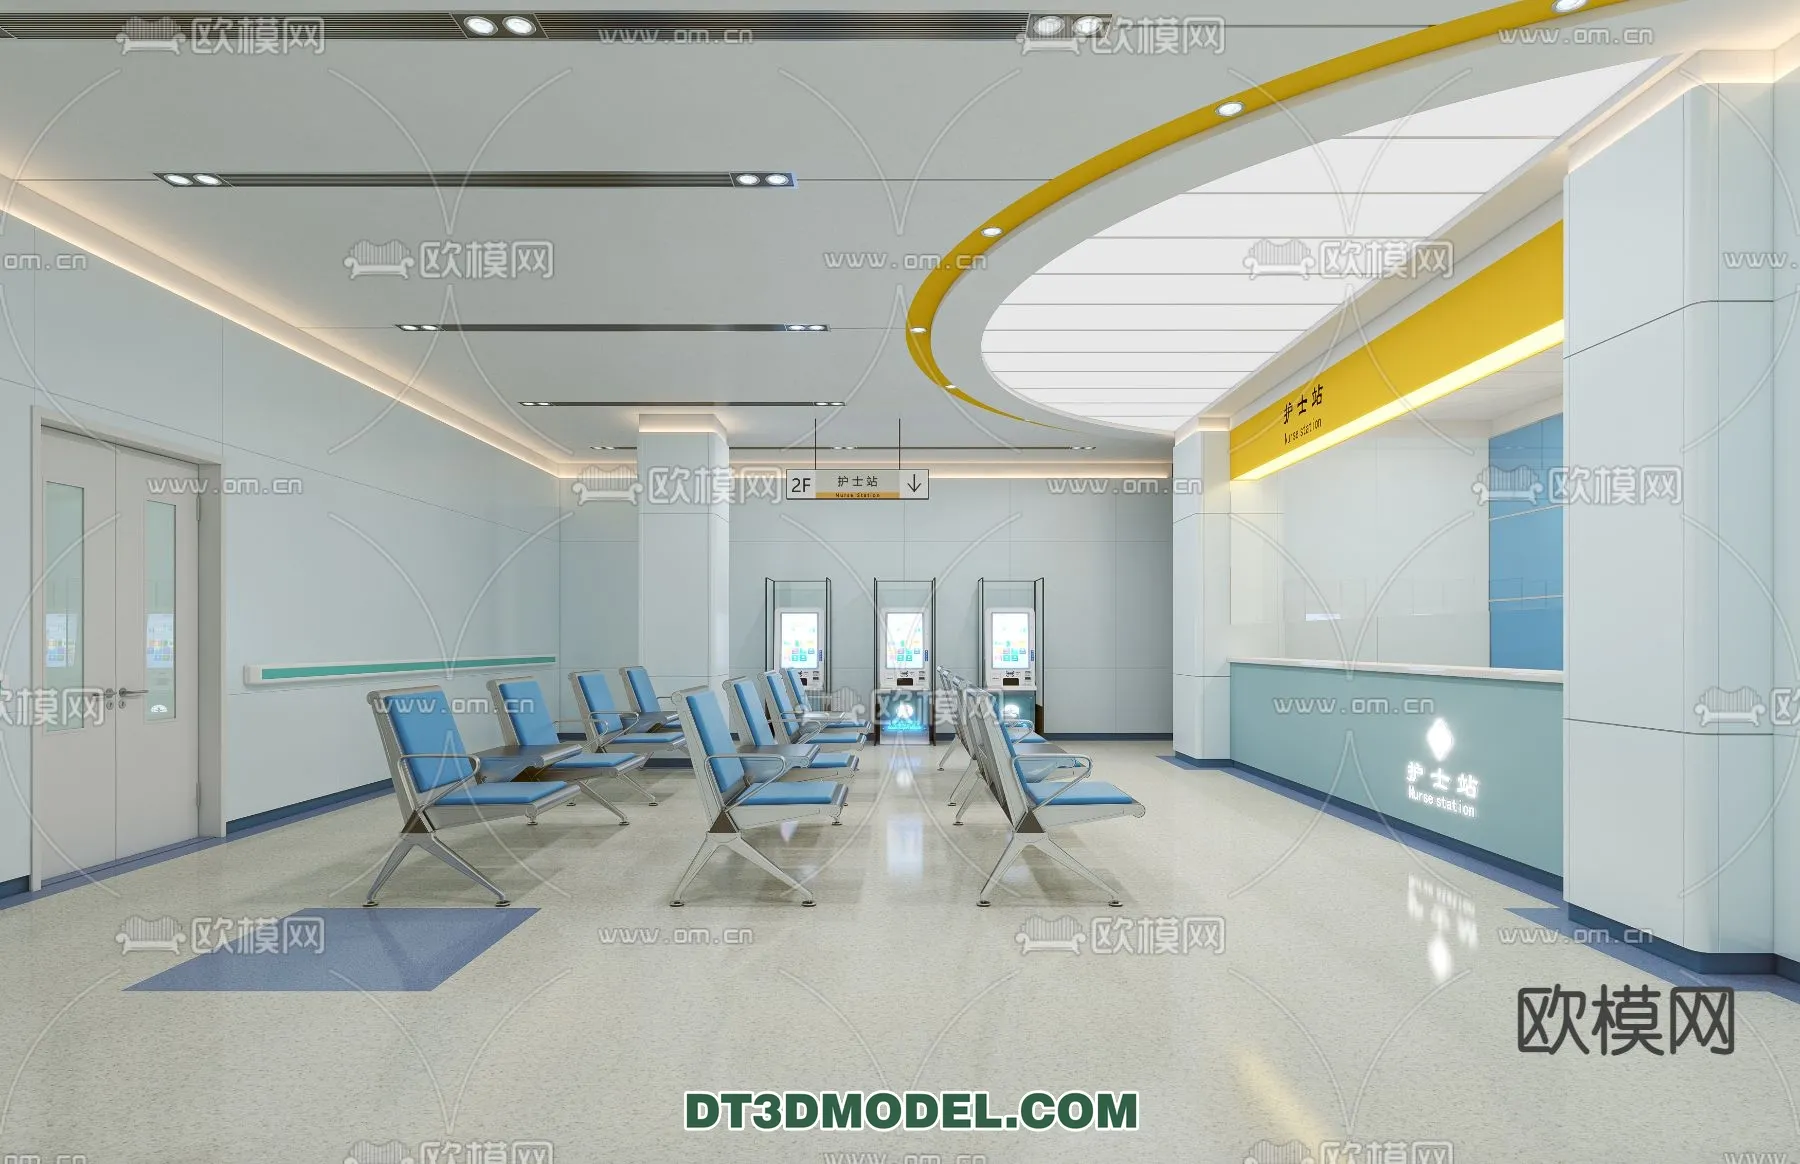 HOSPITAL 3D SCENES – MODERN – 0016